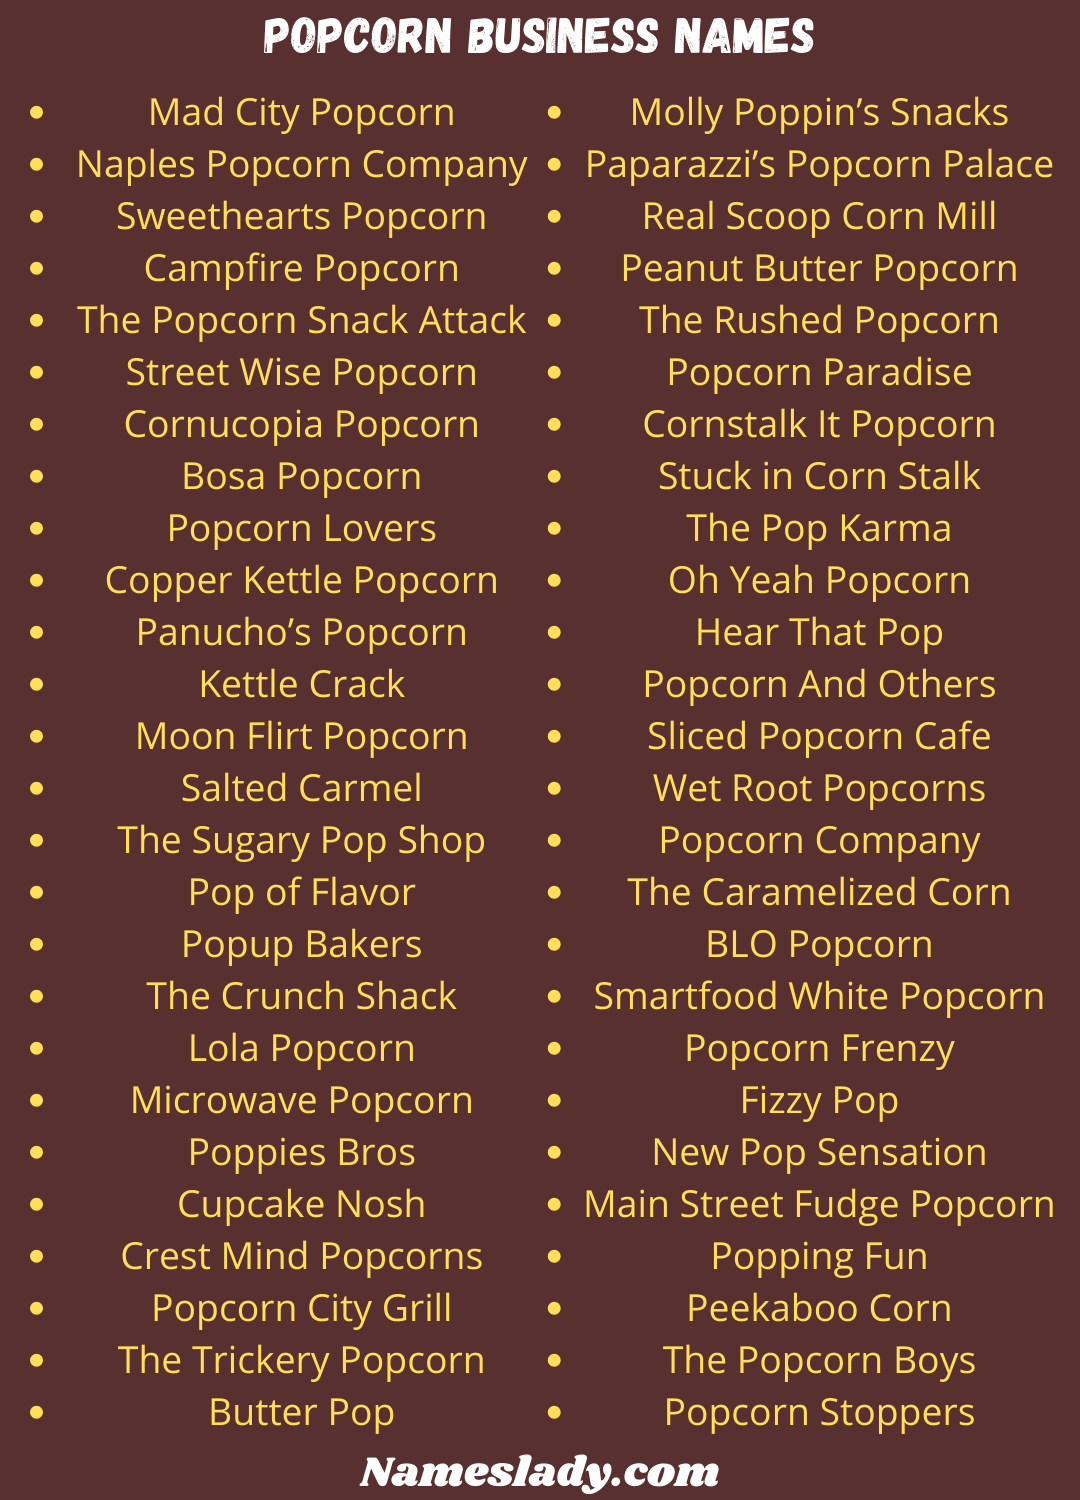 Popcorn Business Names